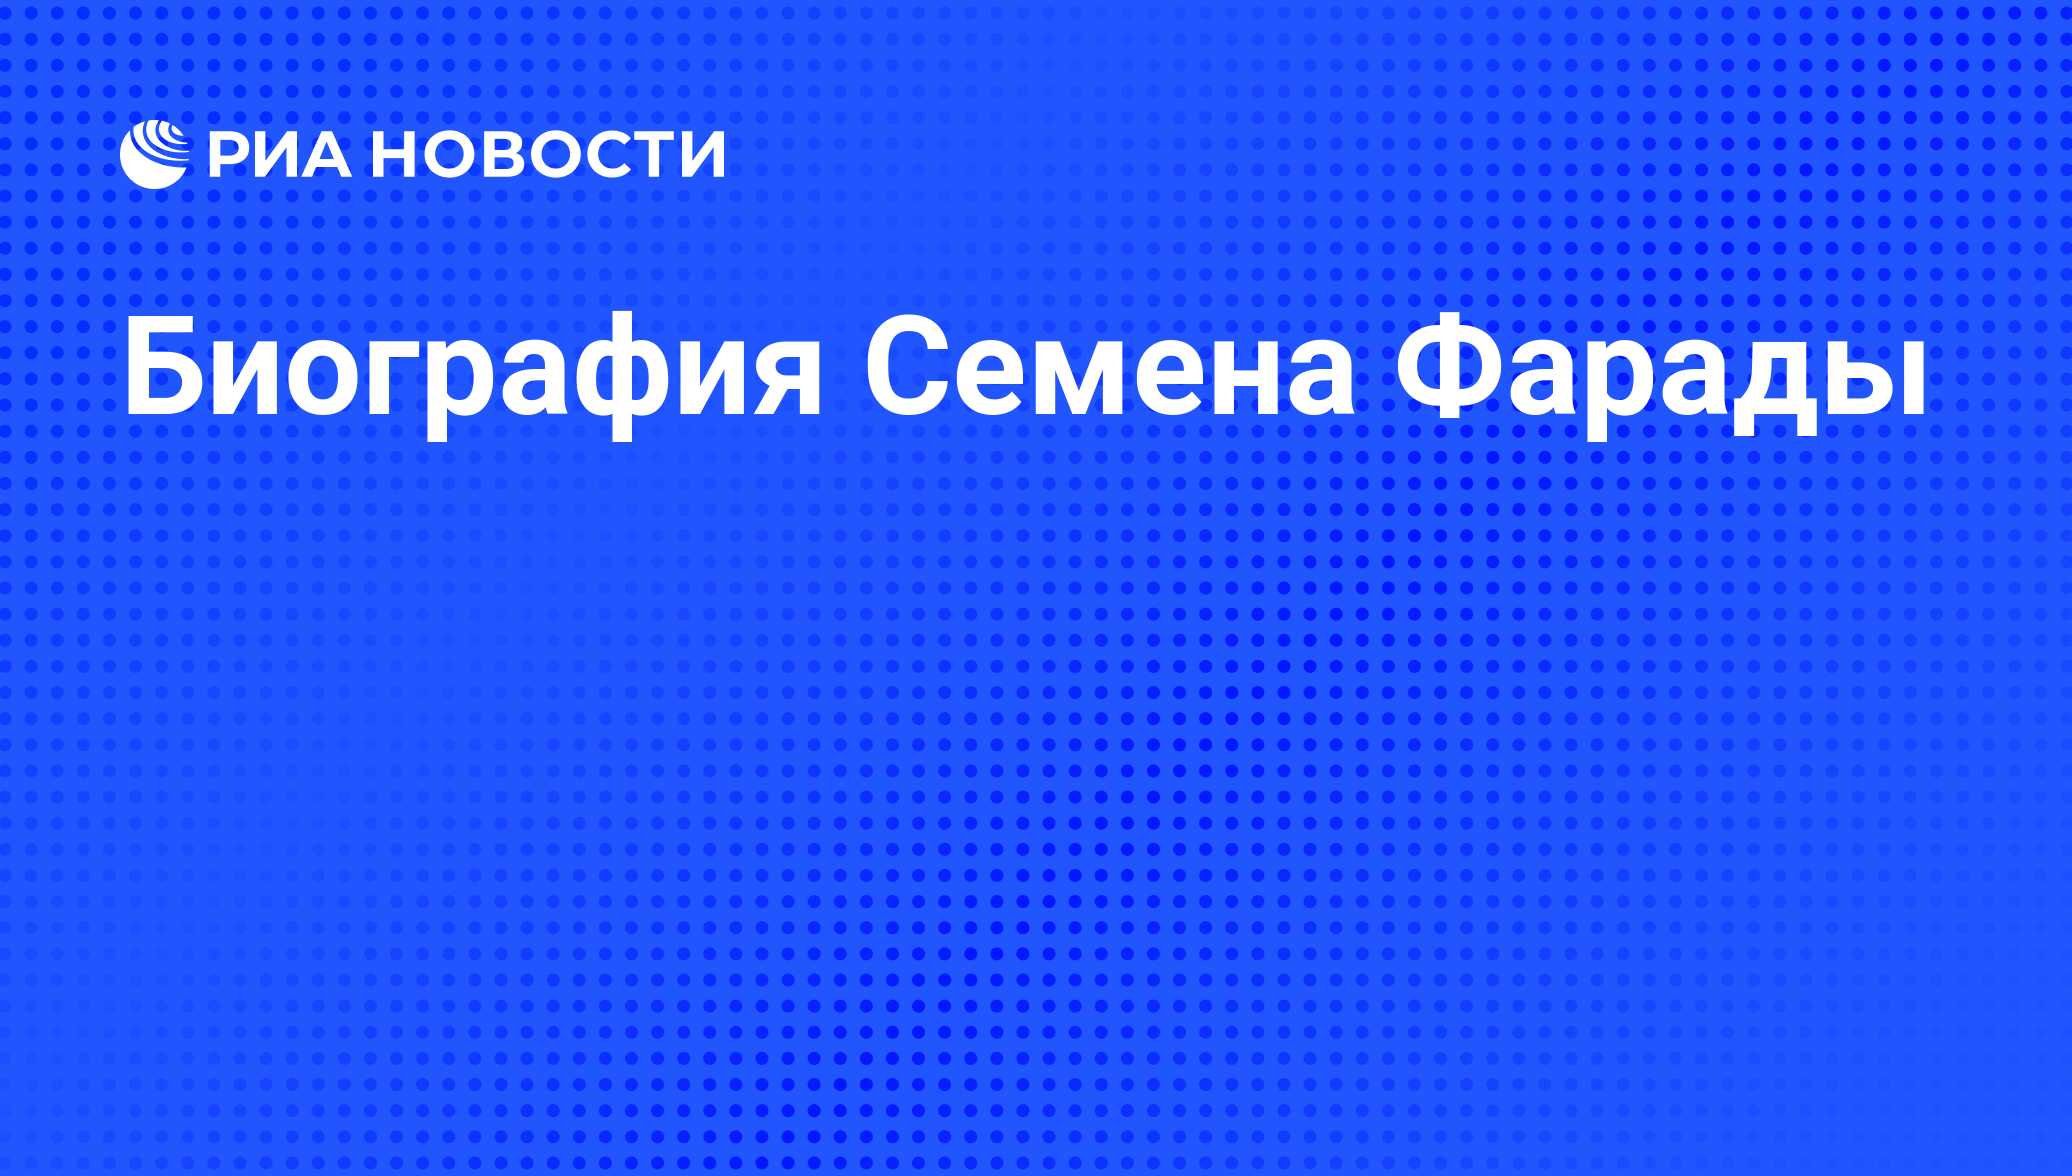 Биография Семена Фарады - РИА Новости, 01.03.2020